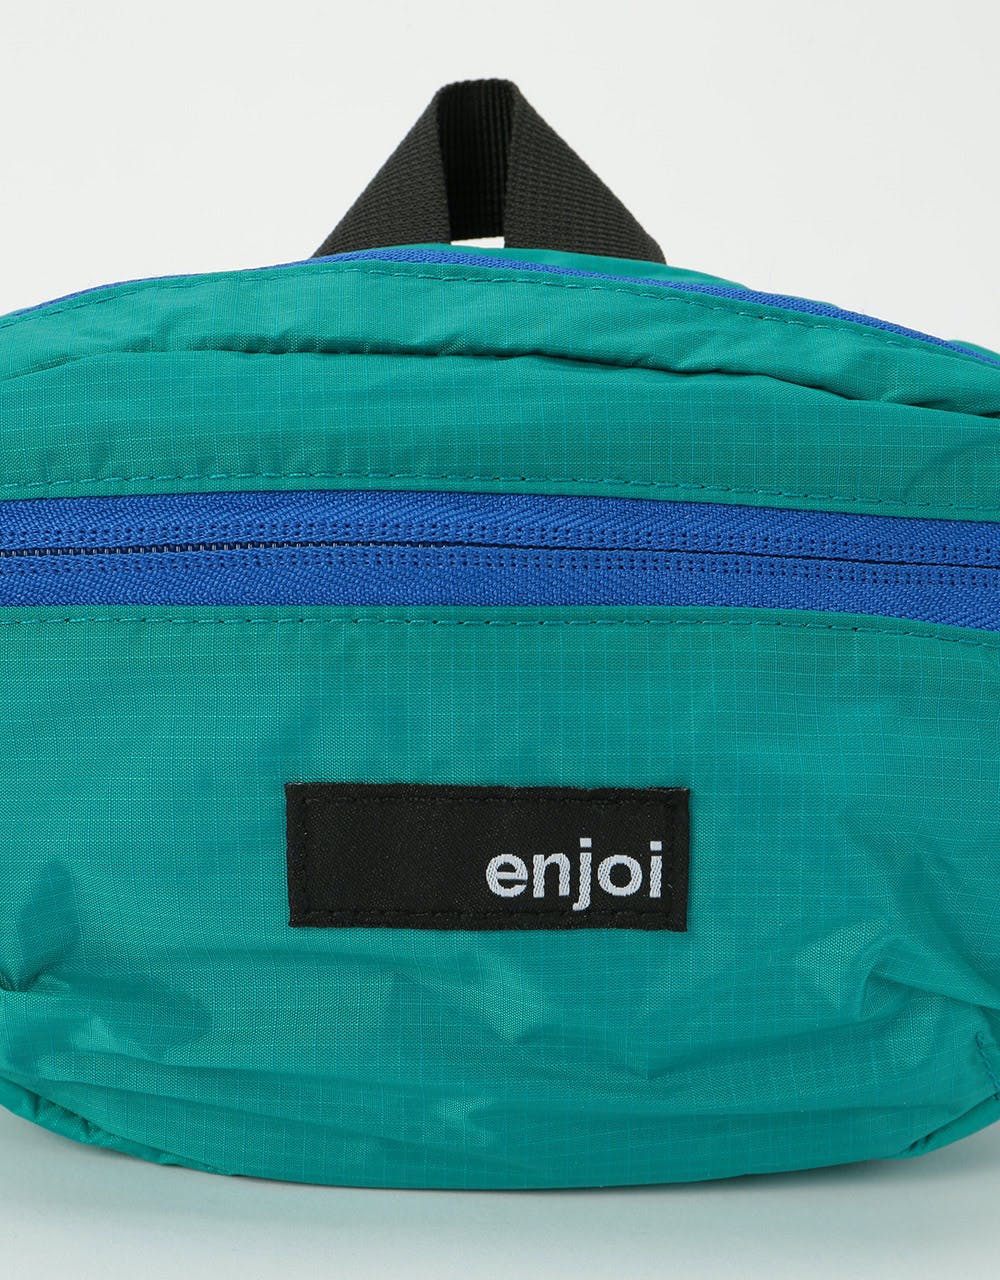 Enjoi Cross Body Bag - Teal